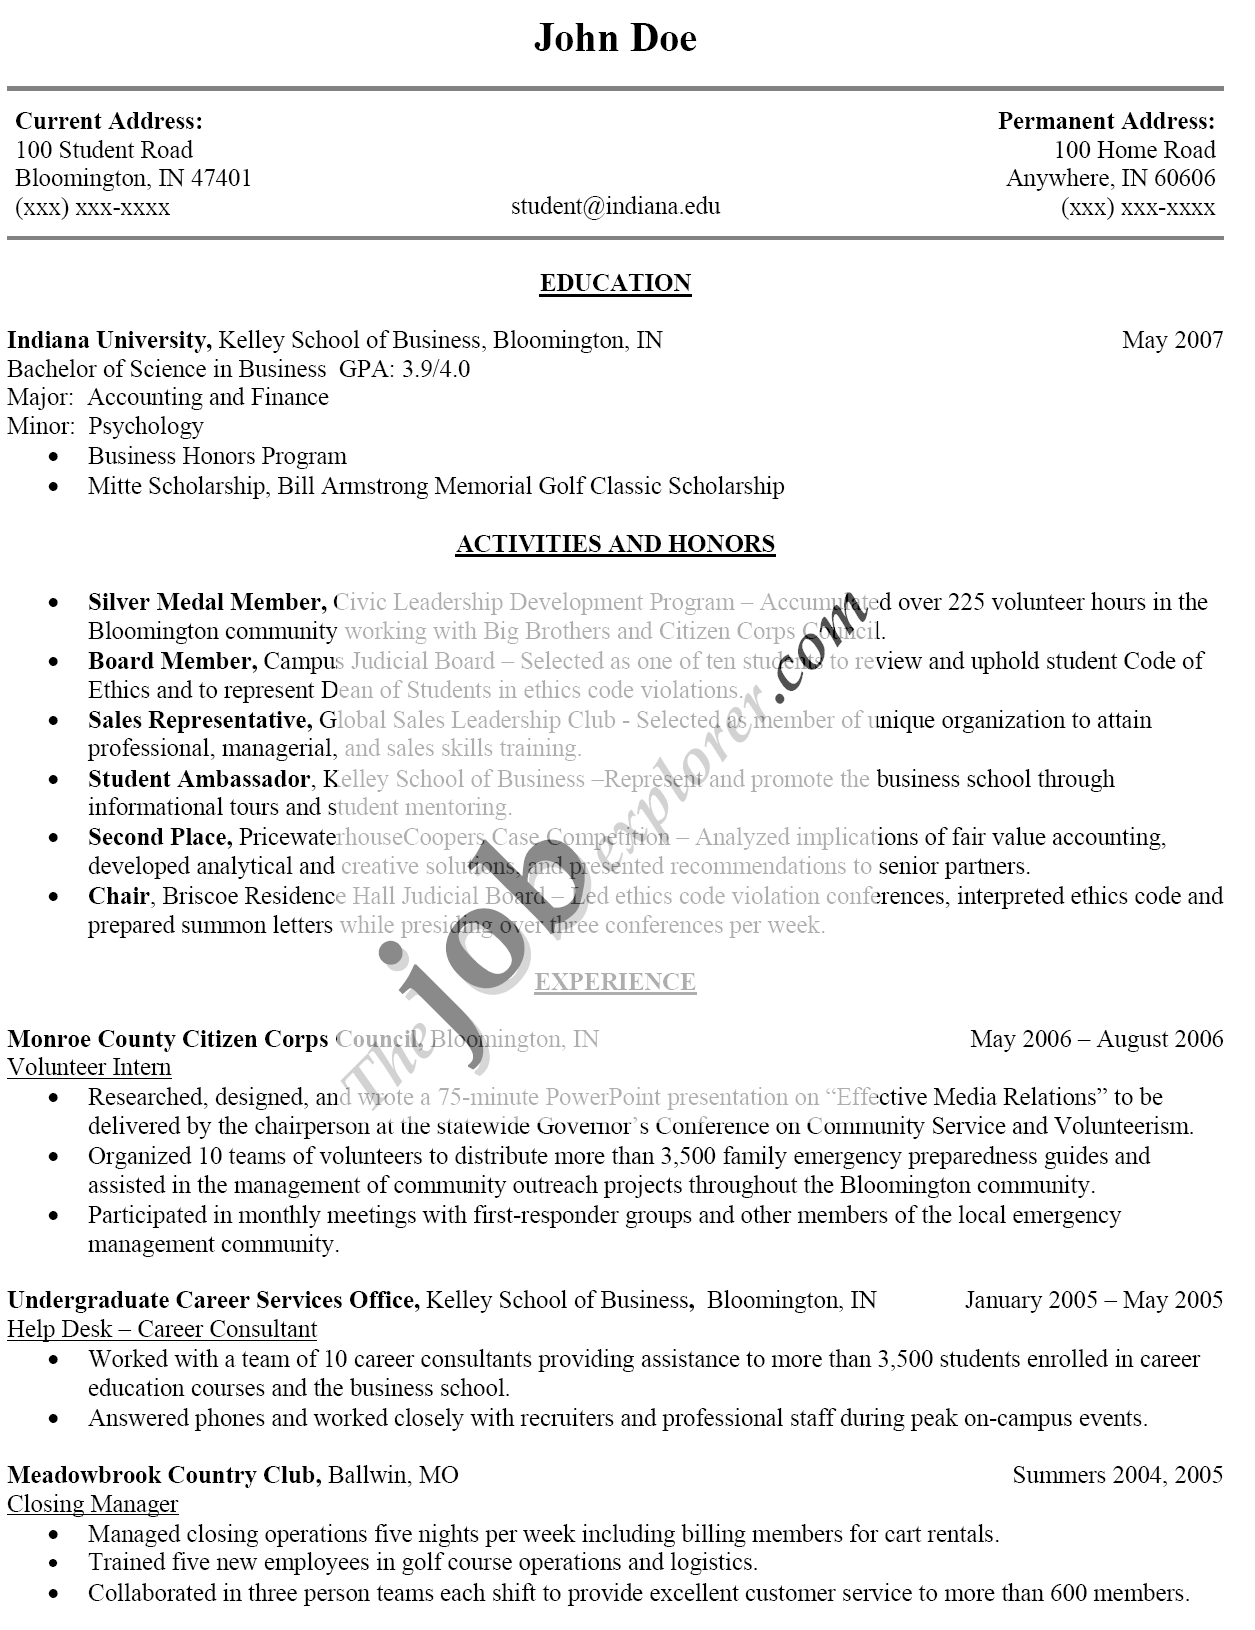 Princeton career services sample resume